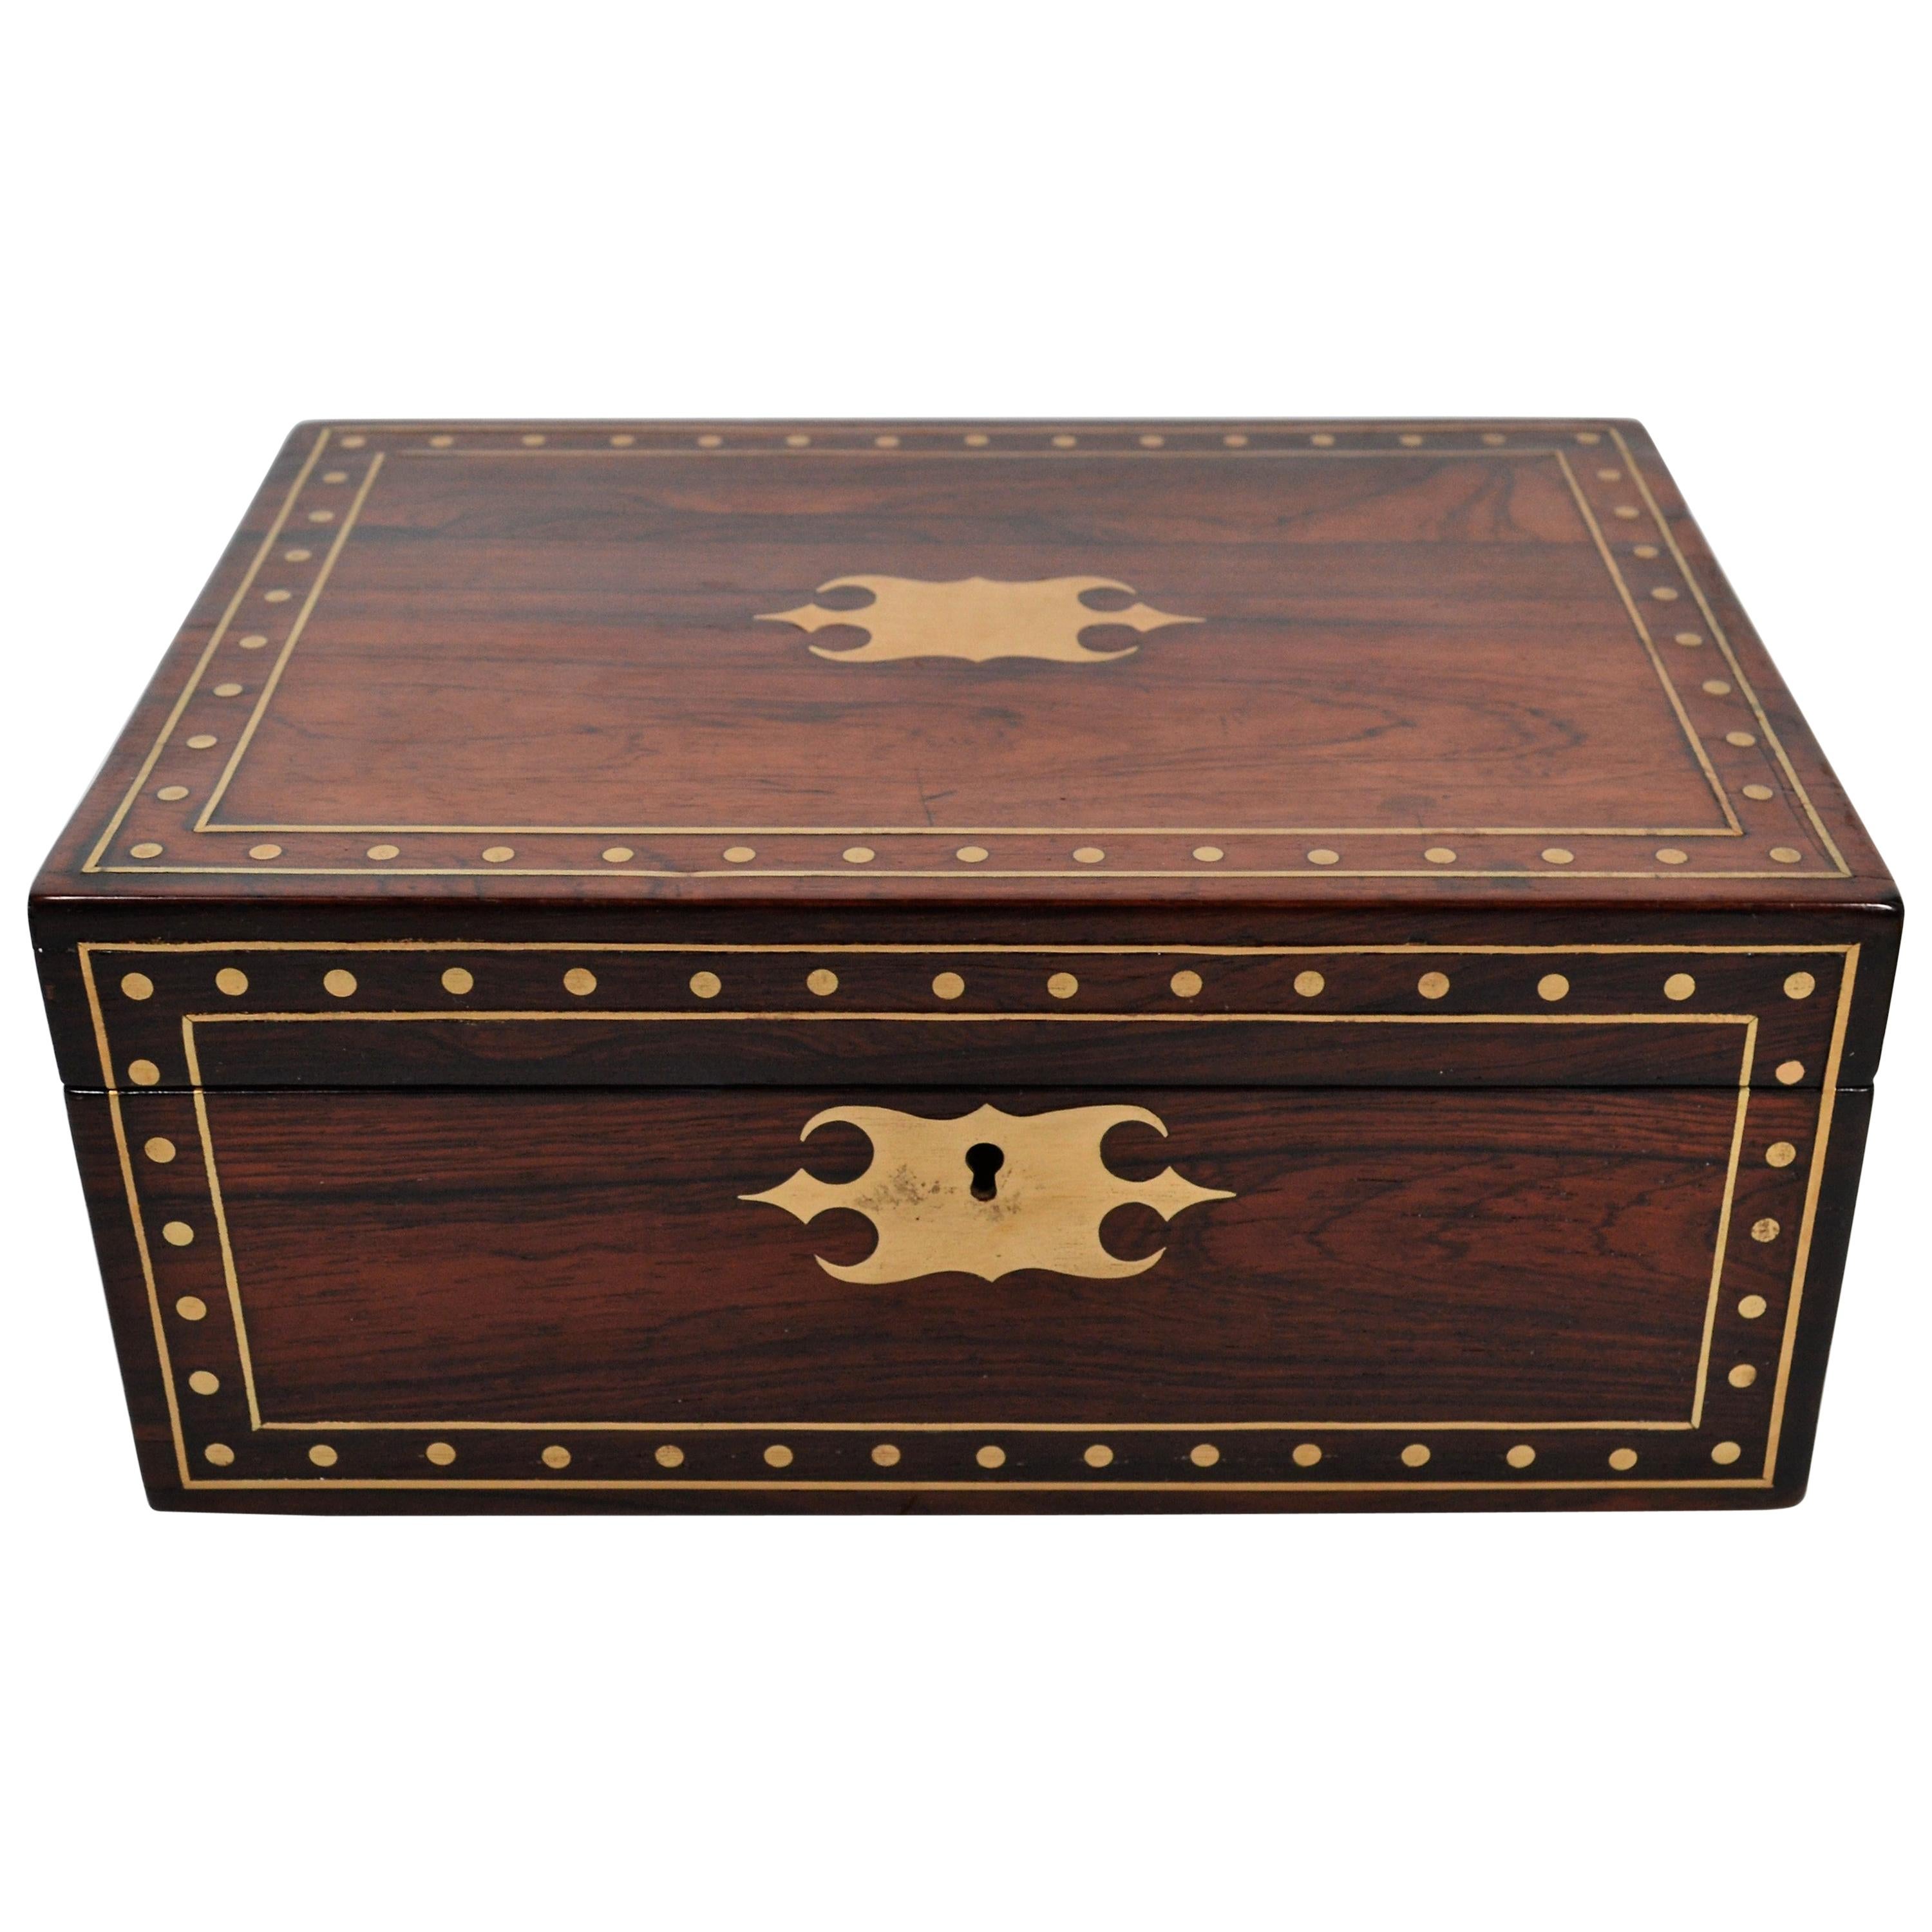 Antique English Regency Period Box, circa 1810-1820